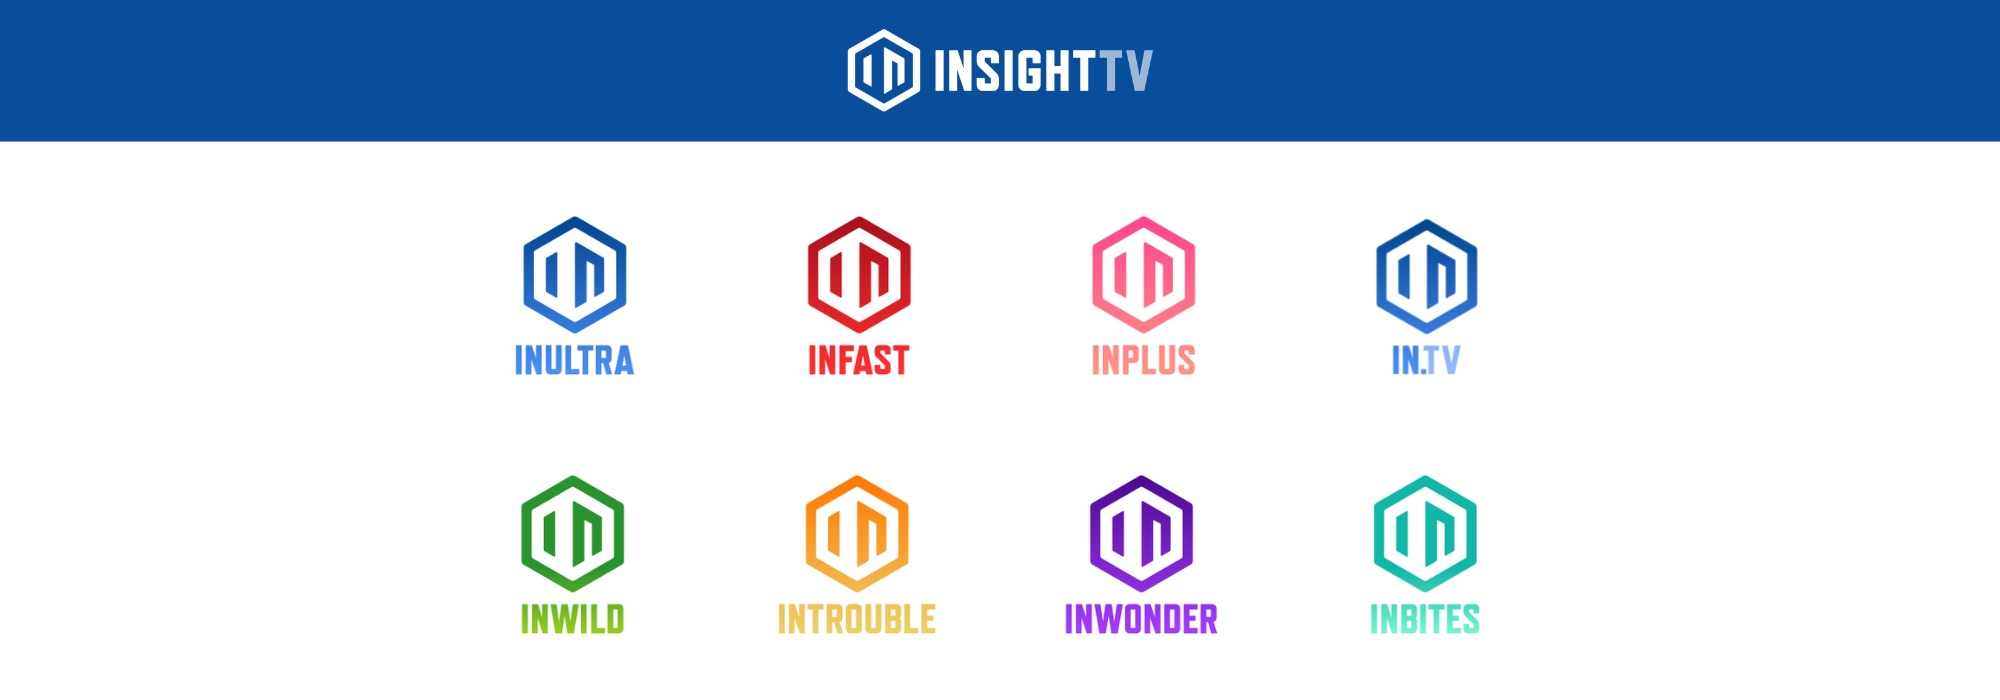 Insight TV 8 Rebranded Channels